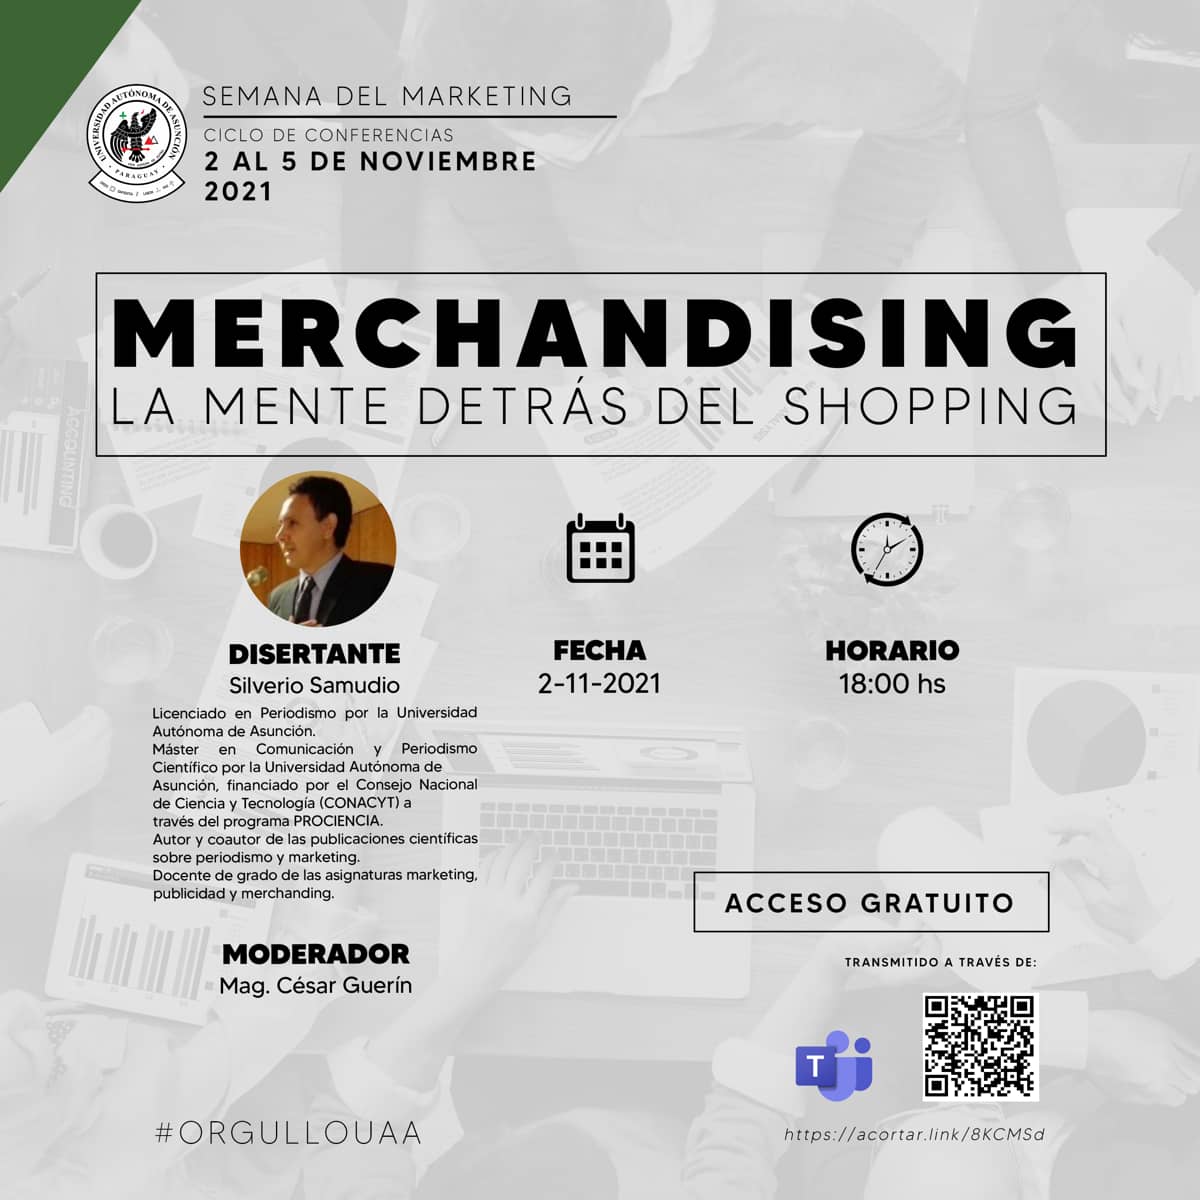 Merchandising - Mente Detrás del Shopping